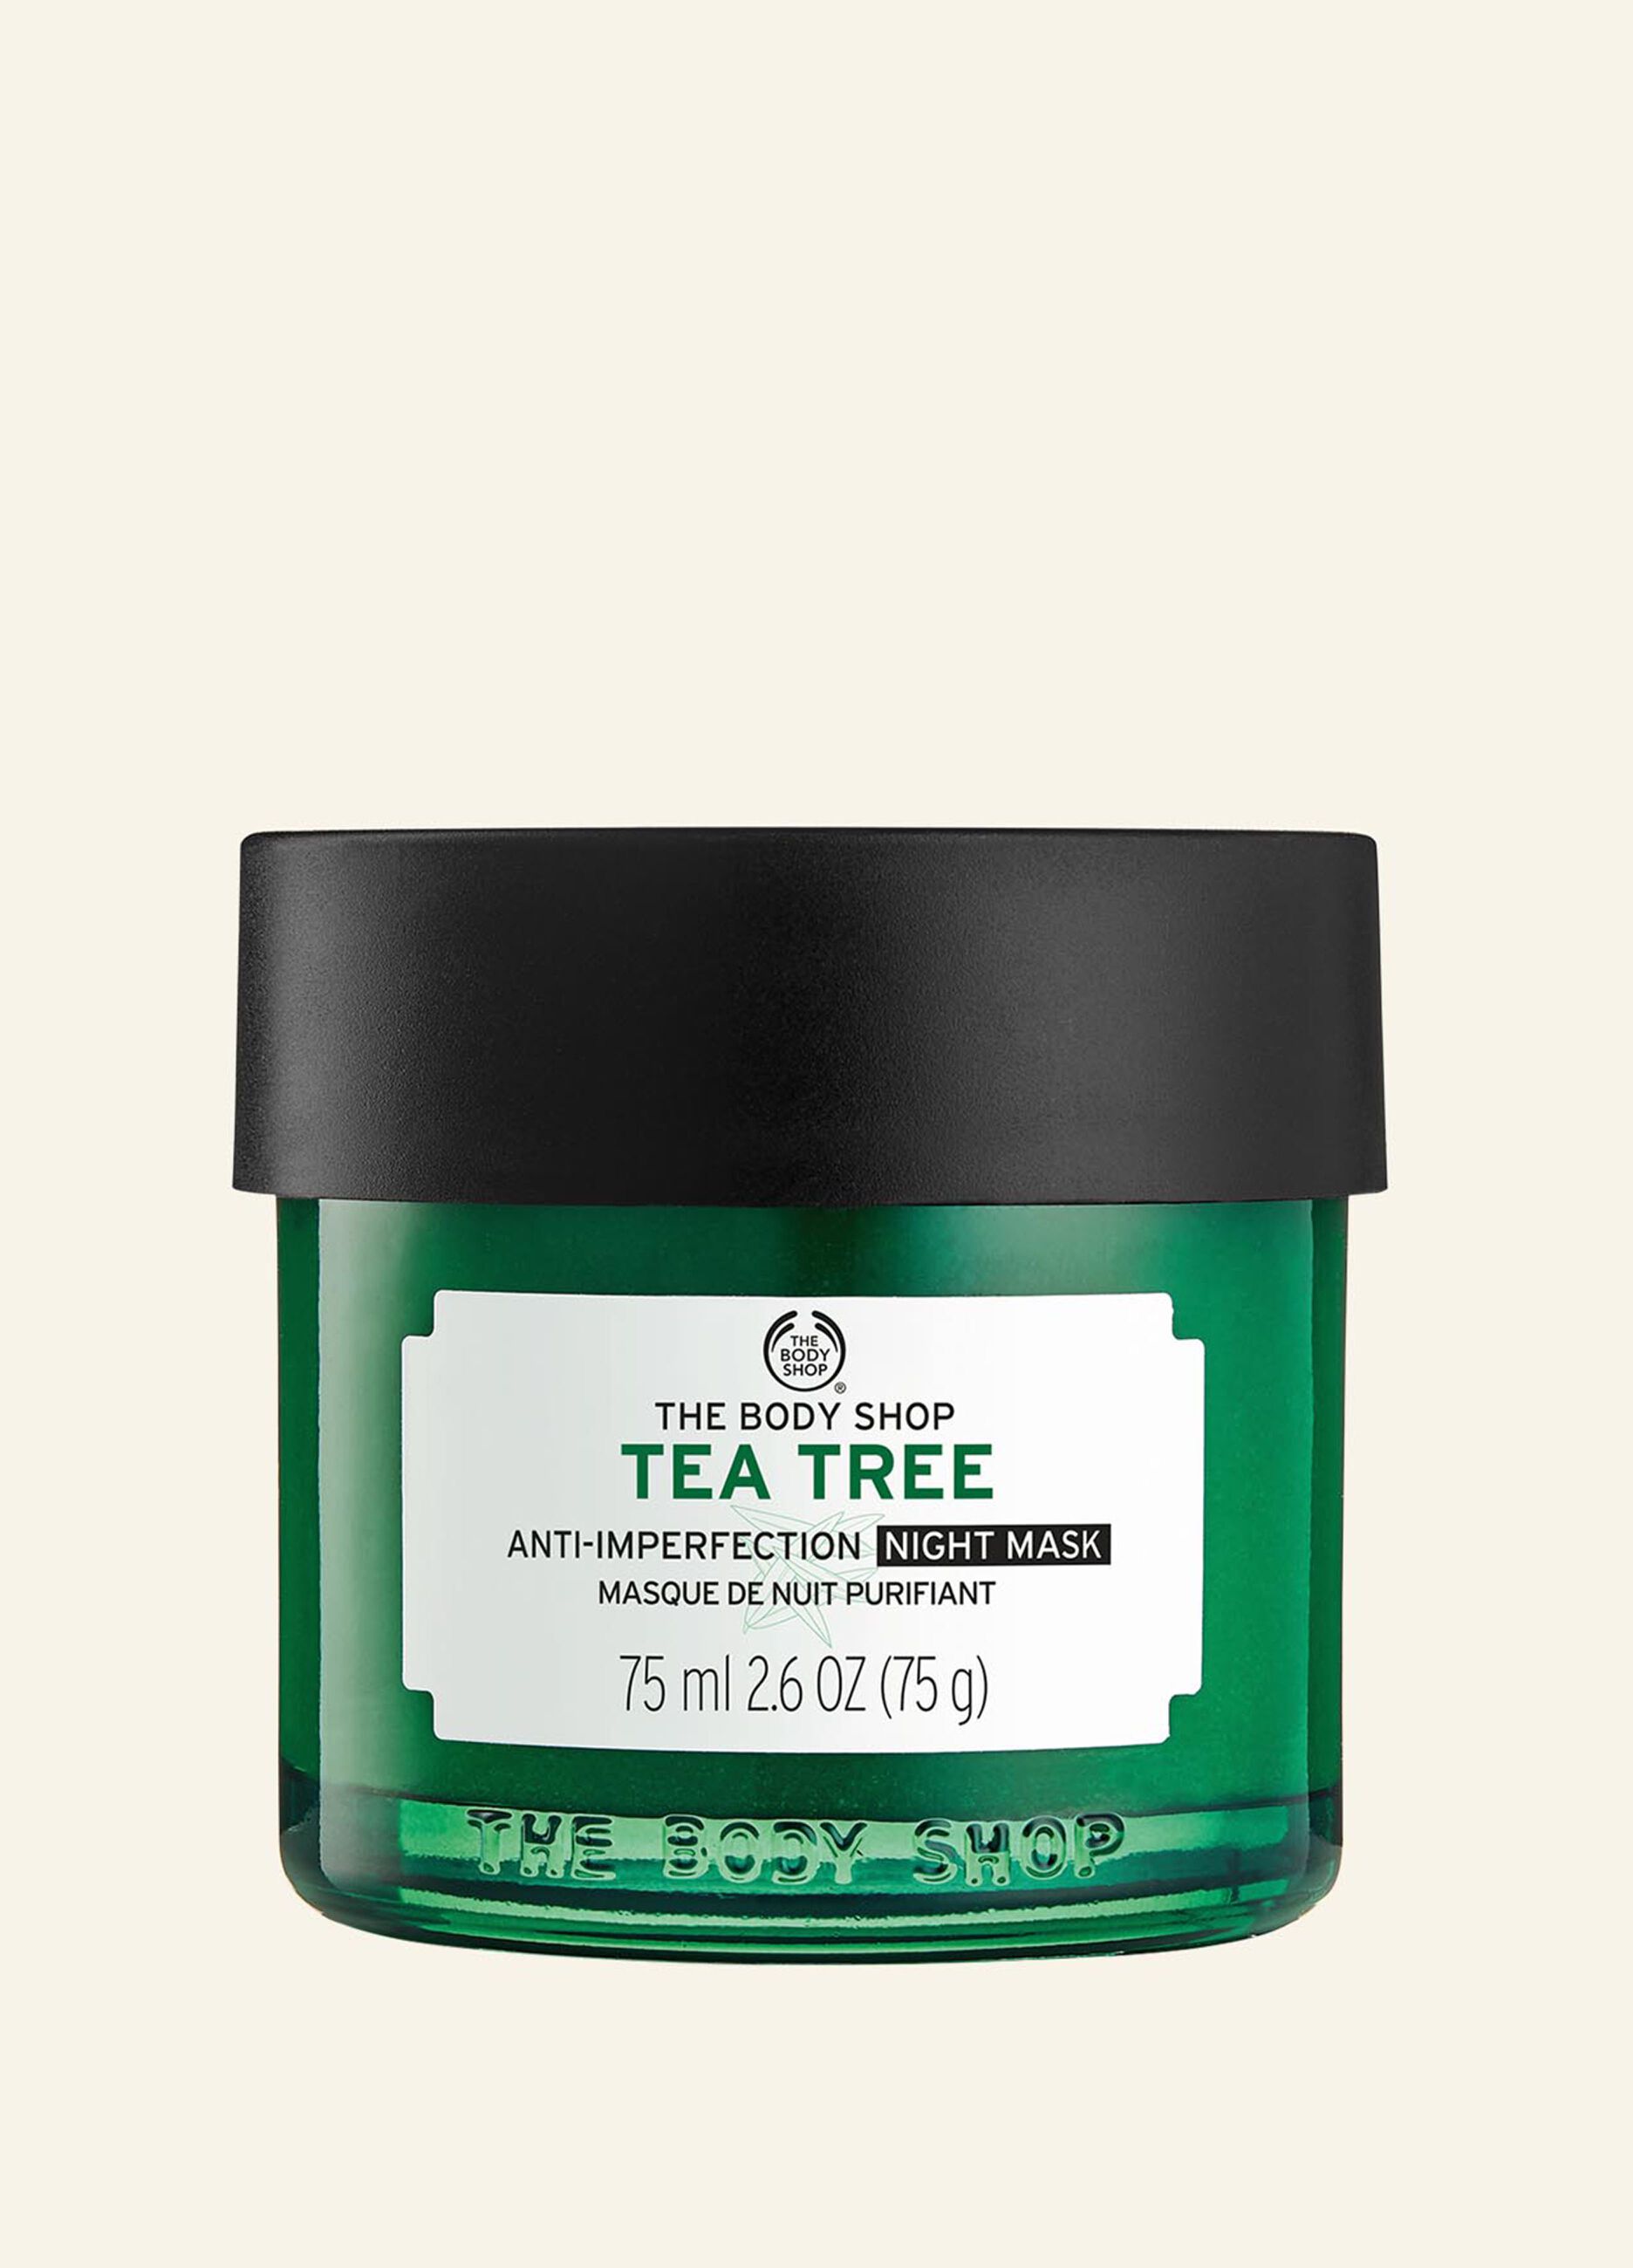 The Body Shop anti-blemish night mask with Tea Tree